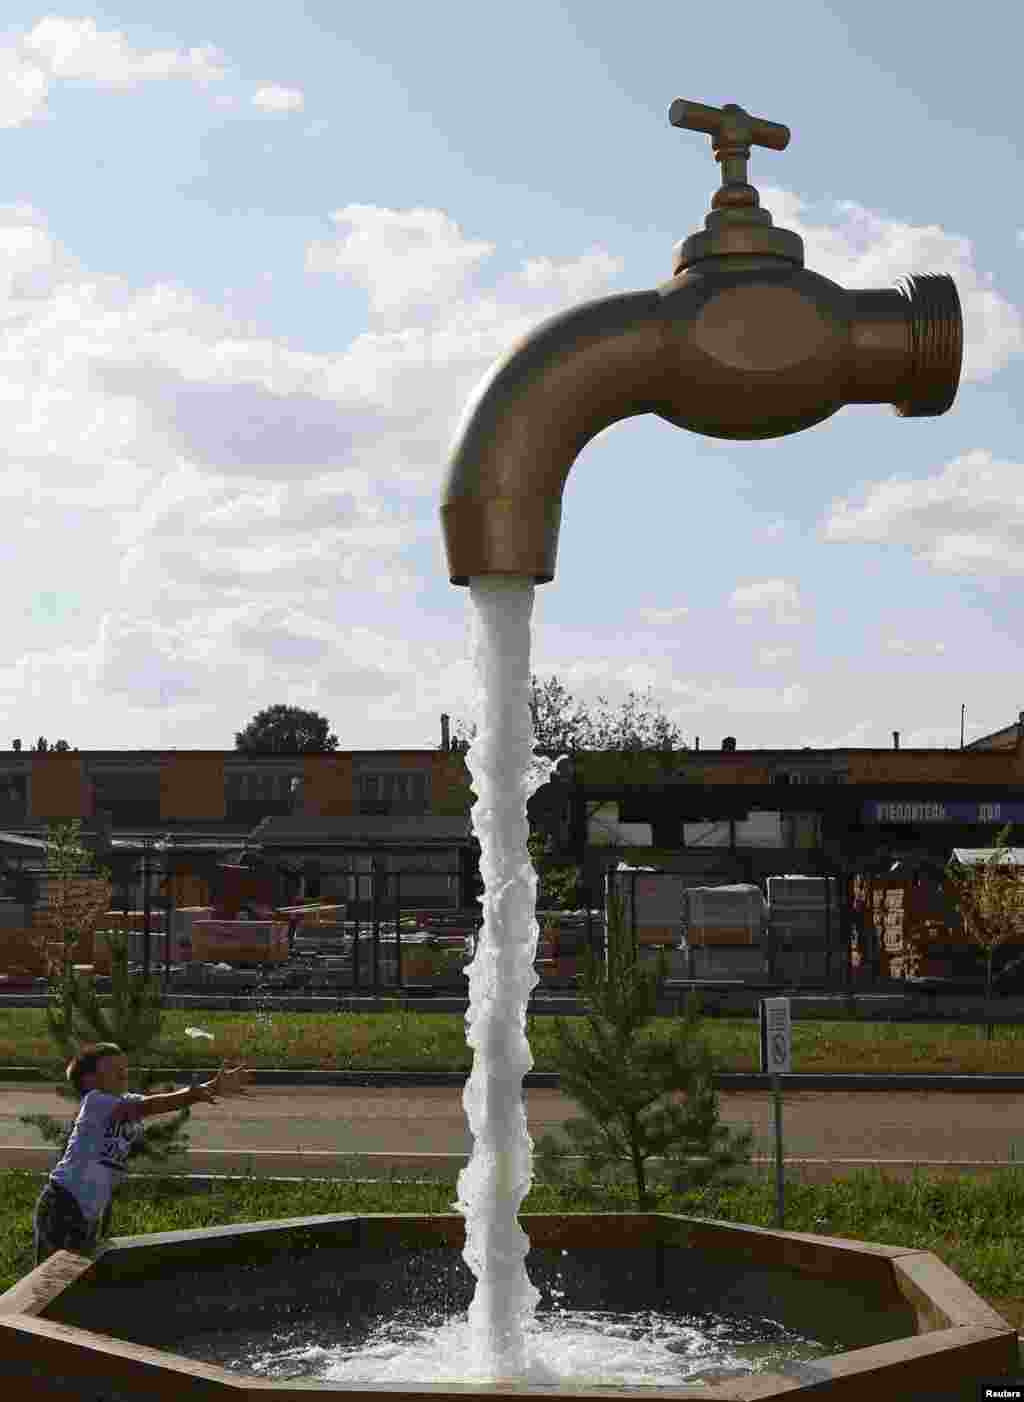 A boy plays near a fountain depicting a water tap in the Siberian city of Krasnoyarsk, Russia, July 27, 2015.